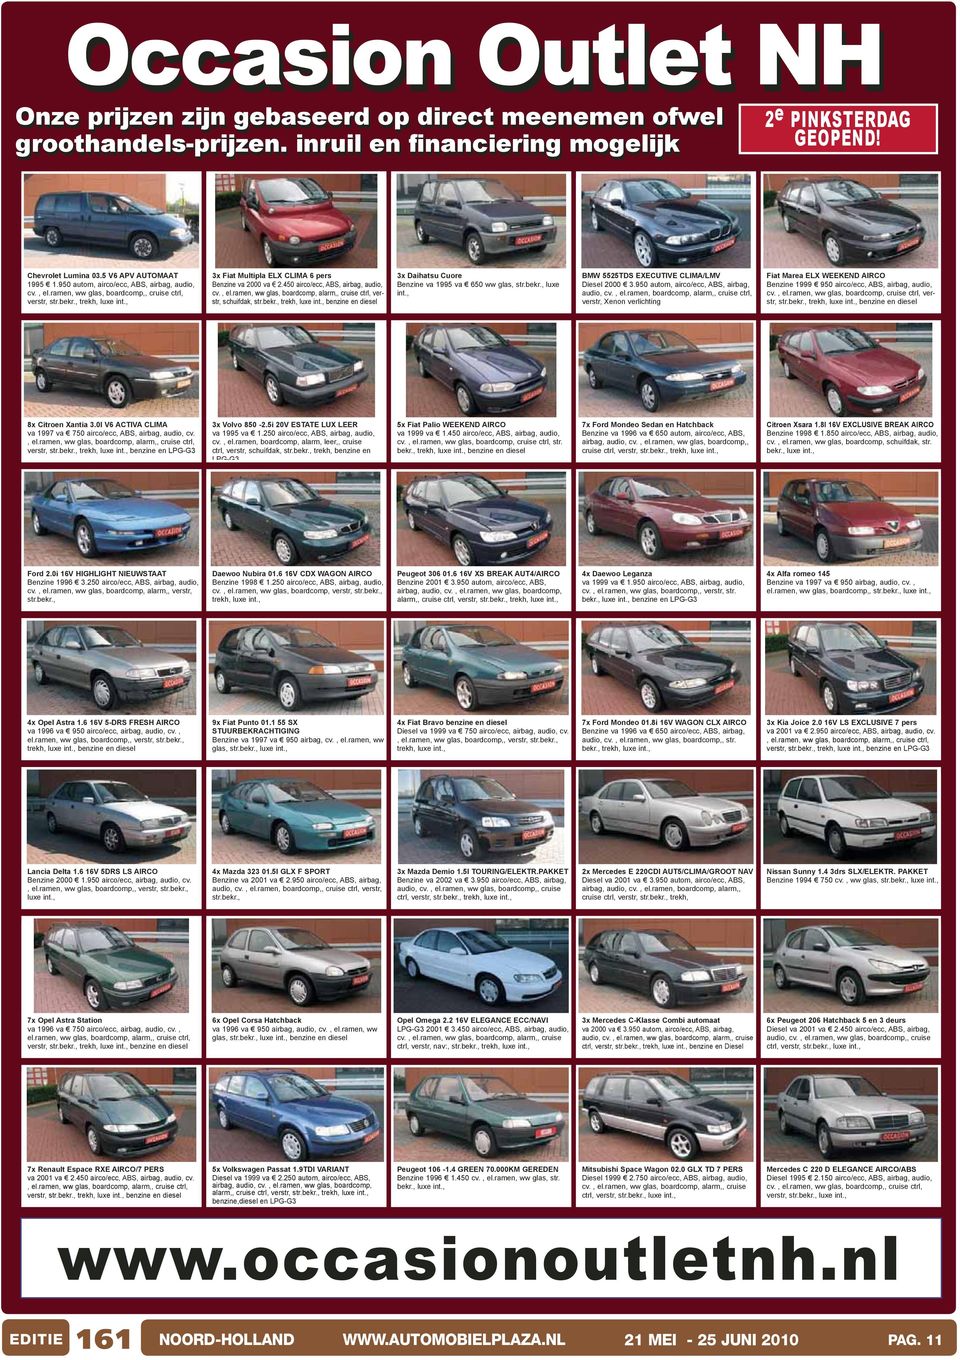 450 airco/ecc, ABS, airbag, audio, cv. verstr, schuifdak, str.bekr., trekh, benzine en diesel 3x Daihatsu Cuore Benzine va 1995 va 650 ww glas, str.bekr., luxe int.